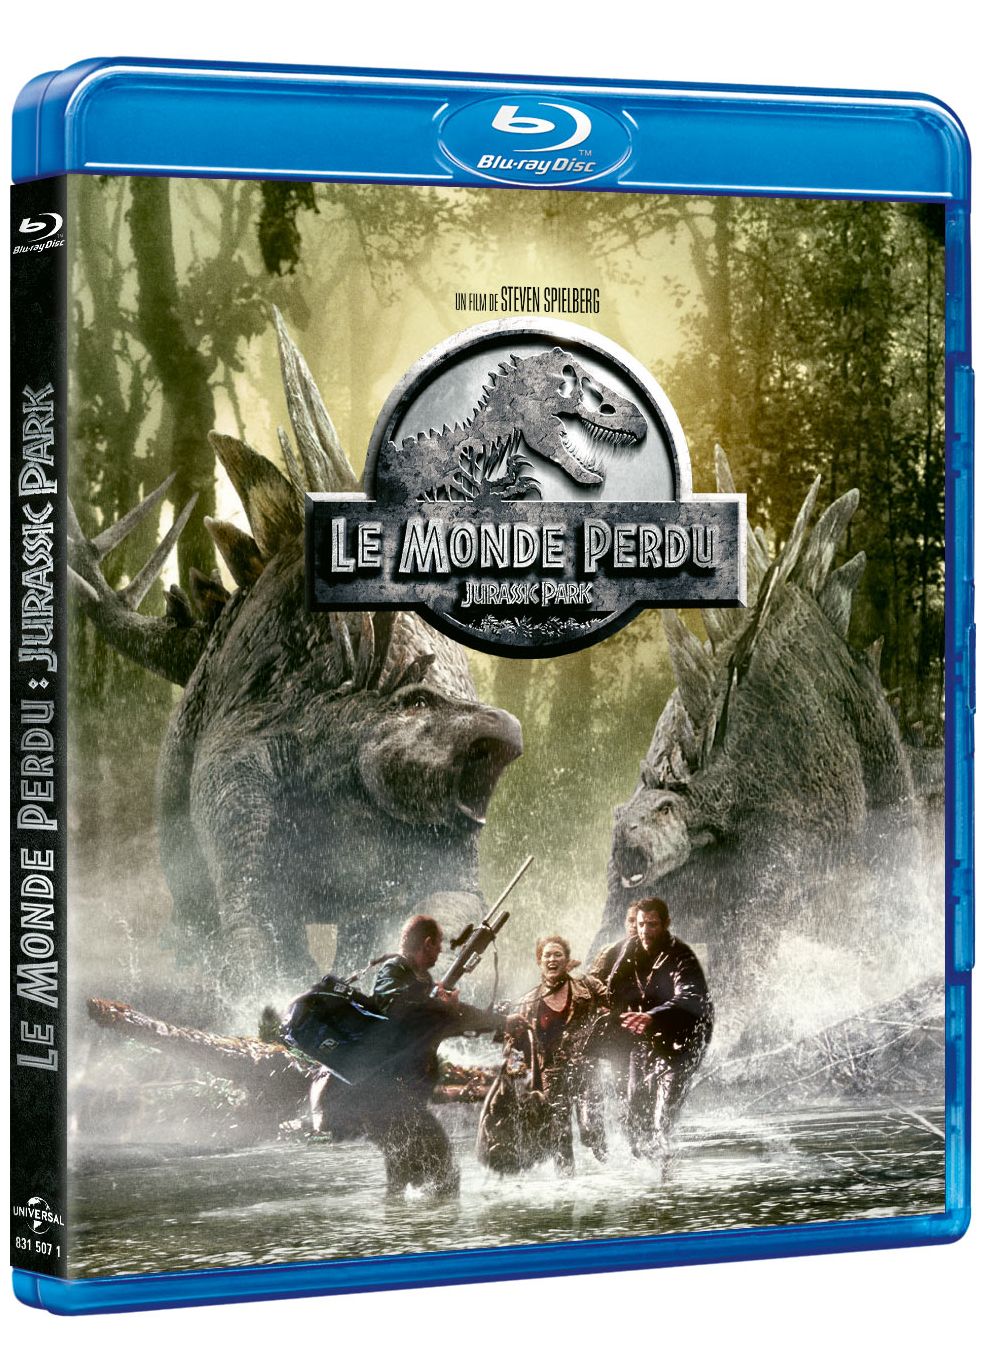 Le Monde perdu : Jurassic Park 2 [Blu-ray à la location]